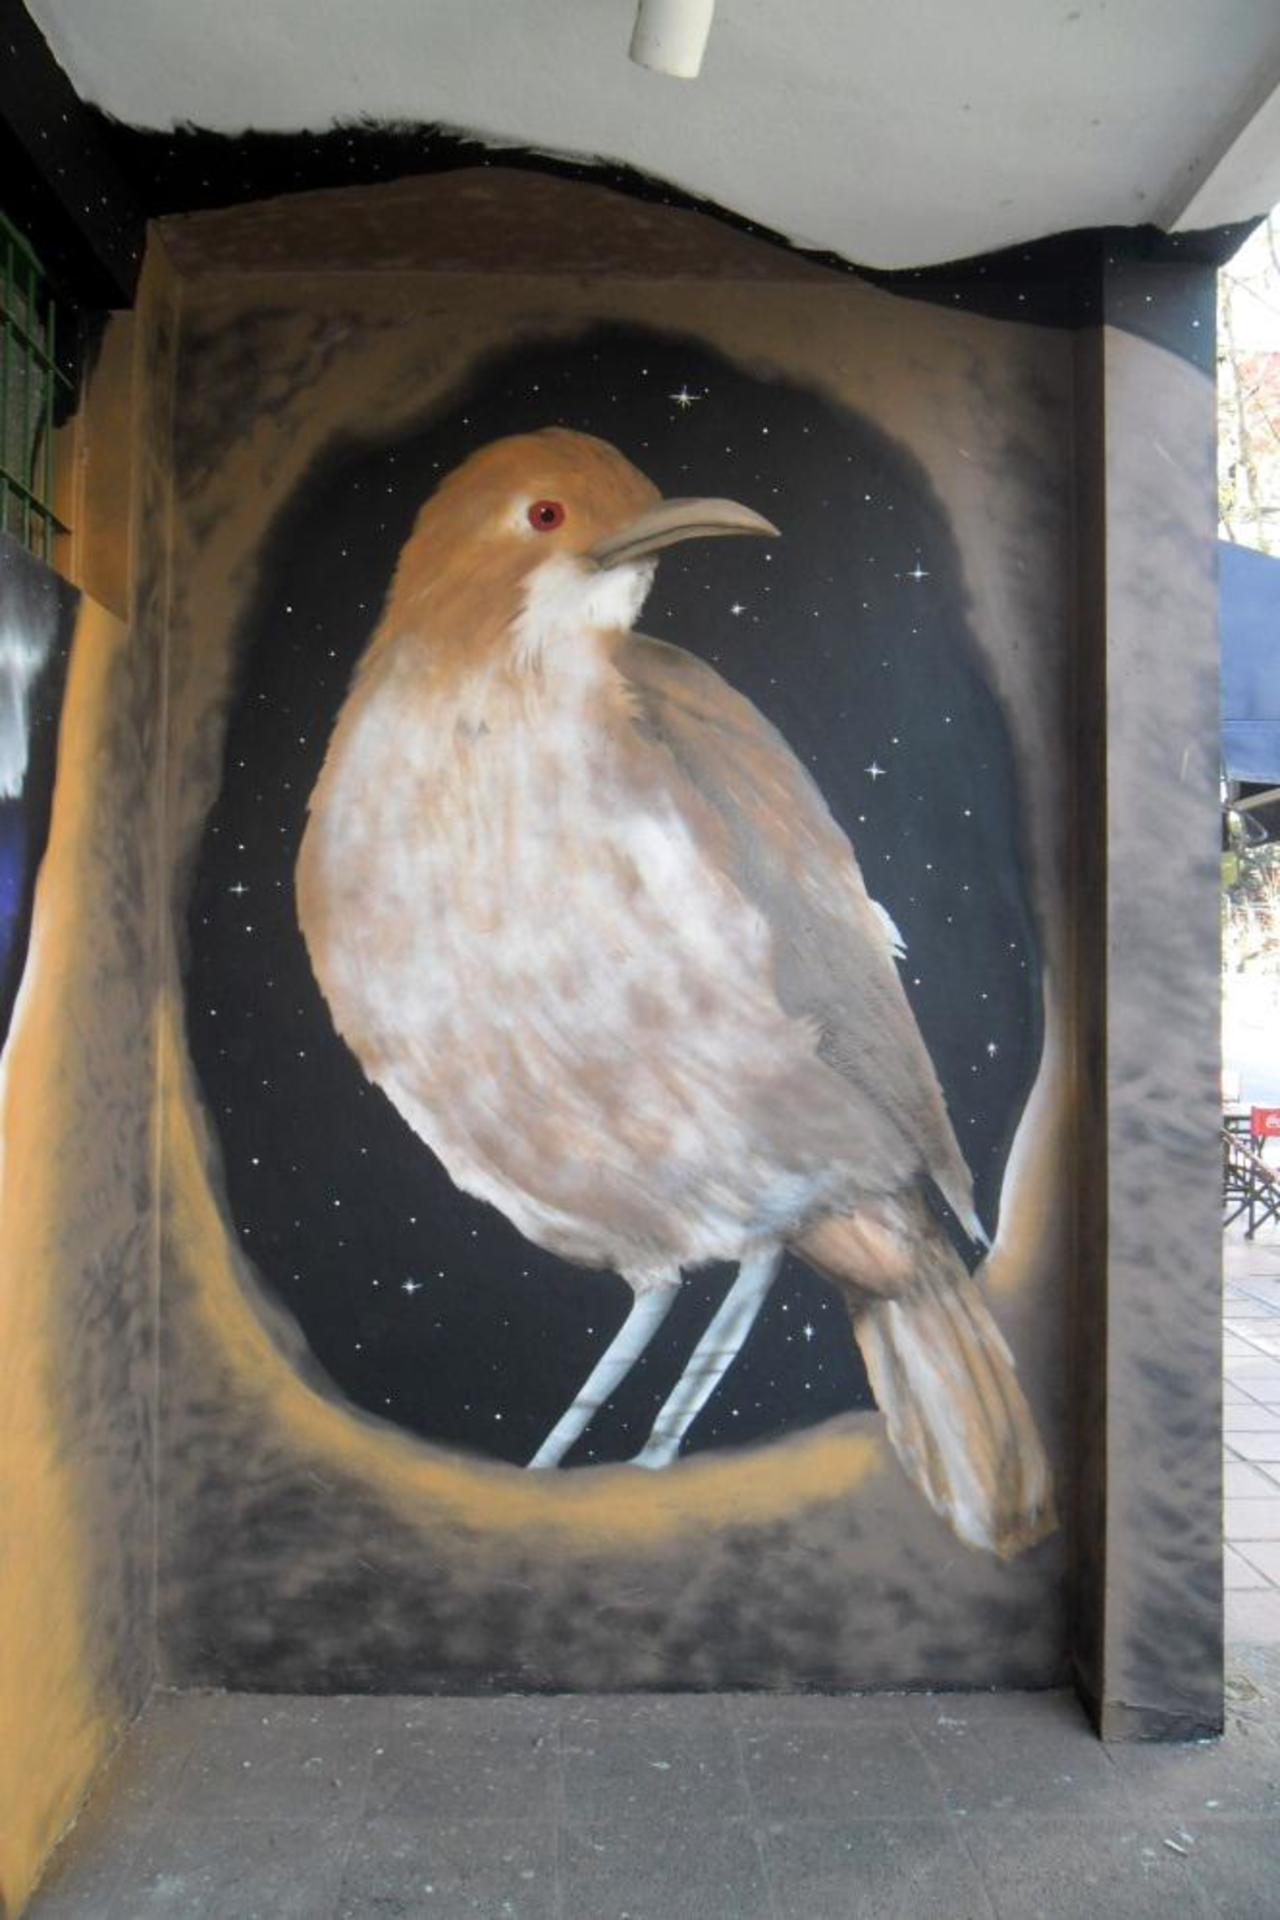 Hornero #streetart #graffiti #bird
en #Neuquén
@lapizgigante @VisualAgenda @Alternopolis @S_Al_Shaheen @streetartnews http://t.co/ICcDVv4esW